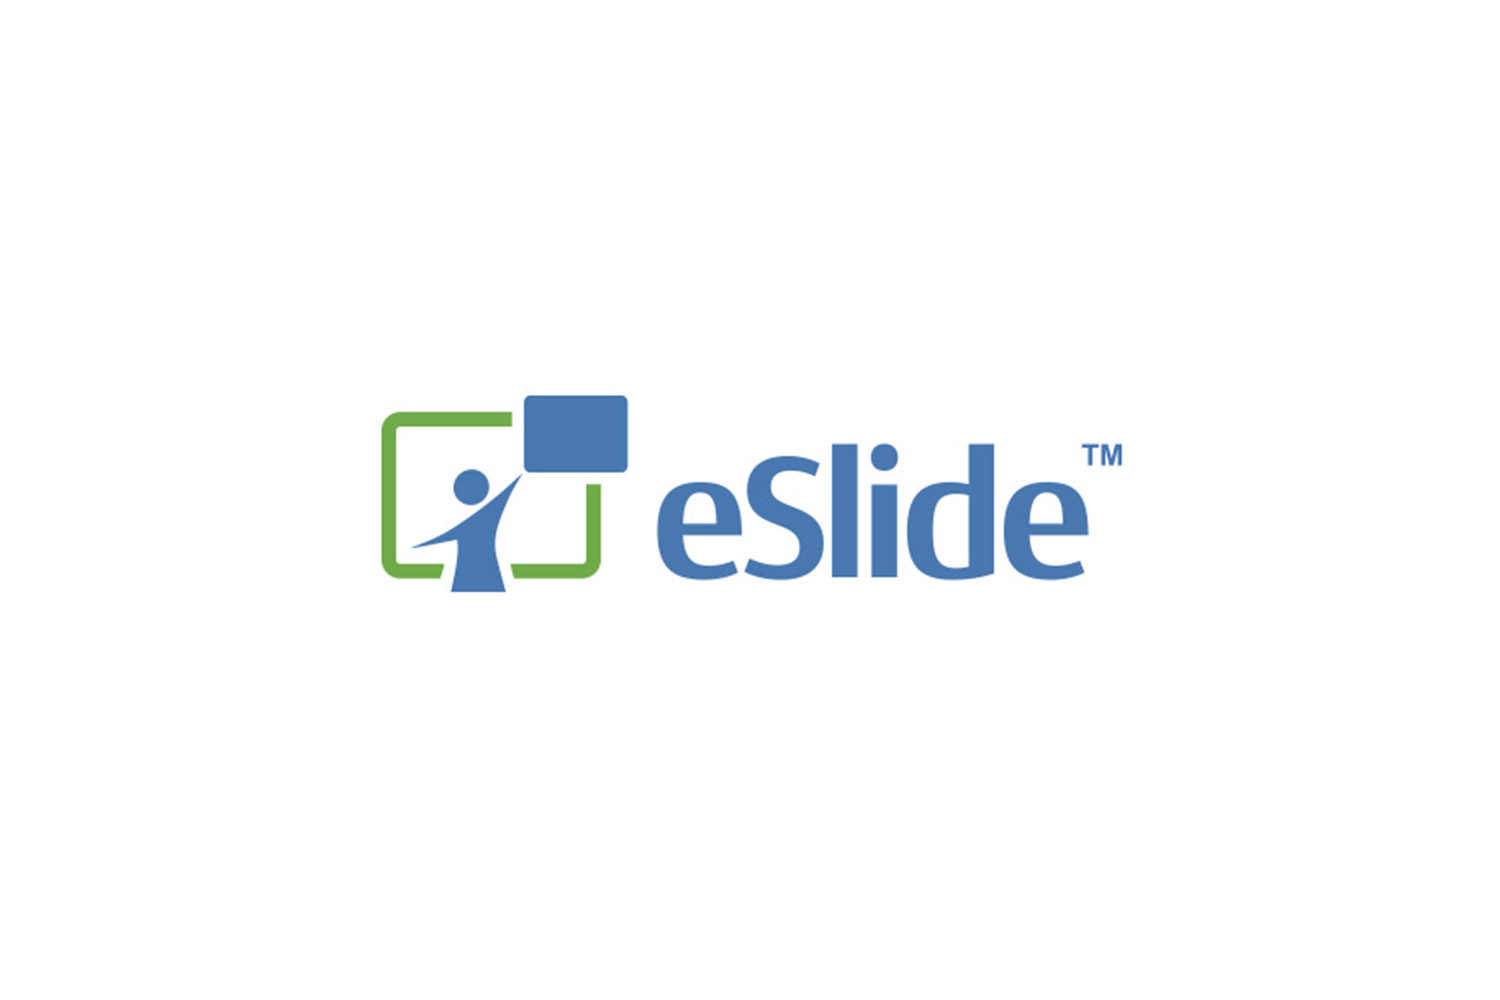 eSlide